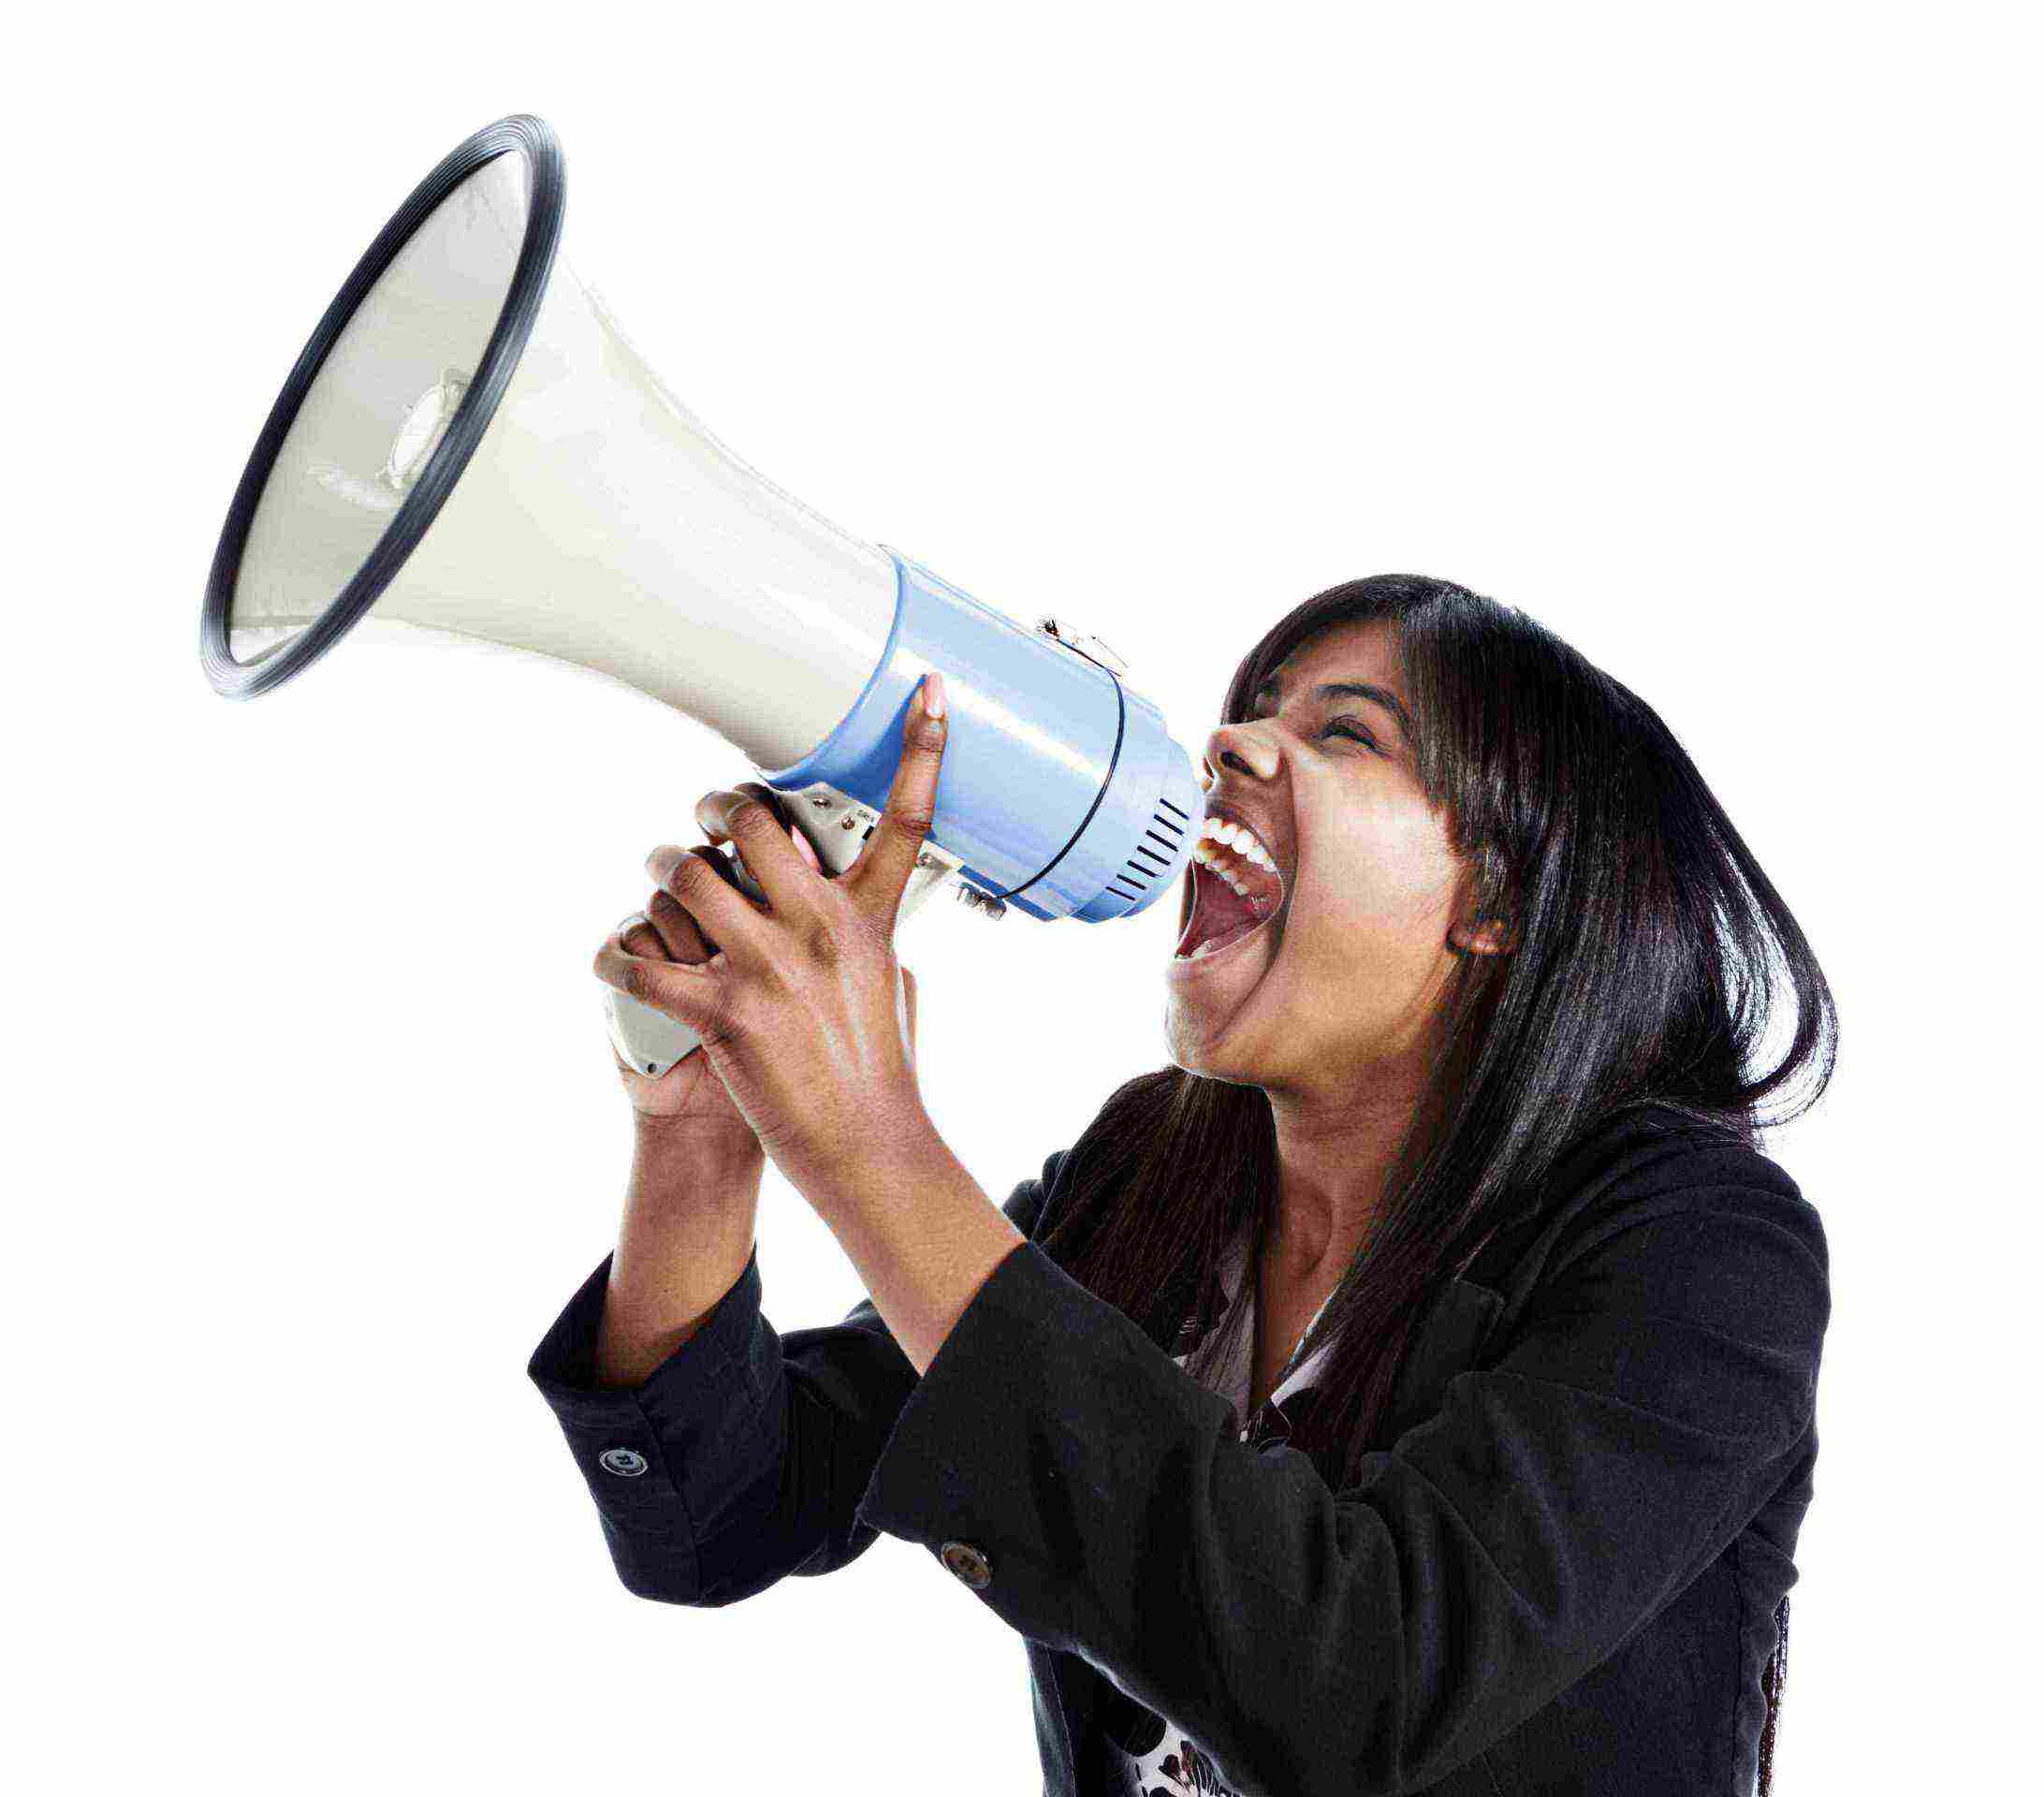 Woman yells through loud hailer energetically